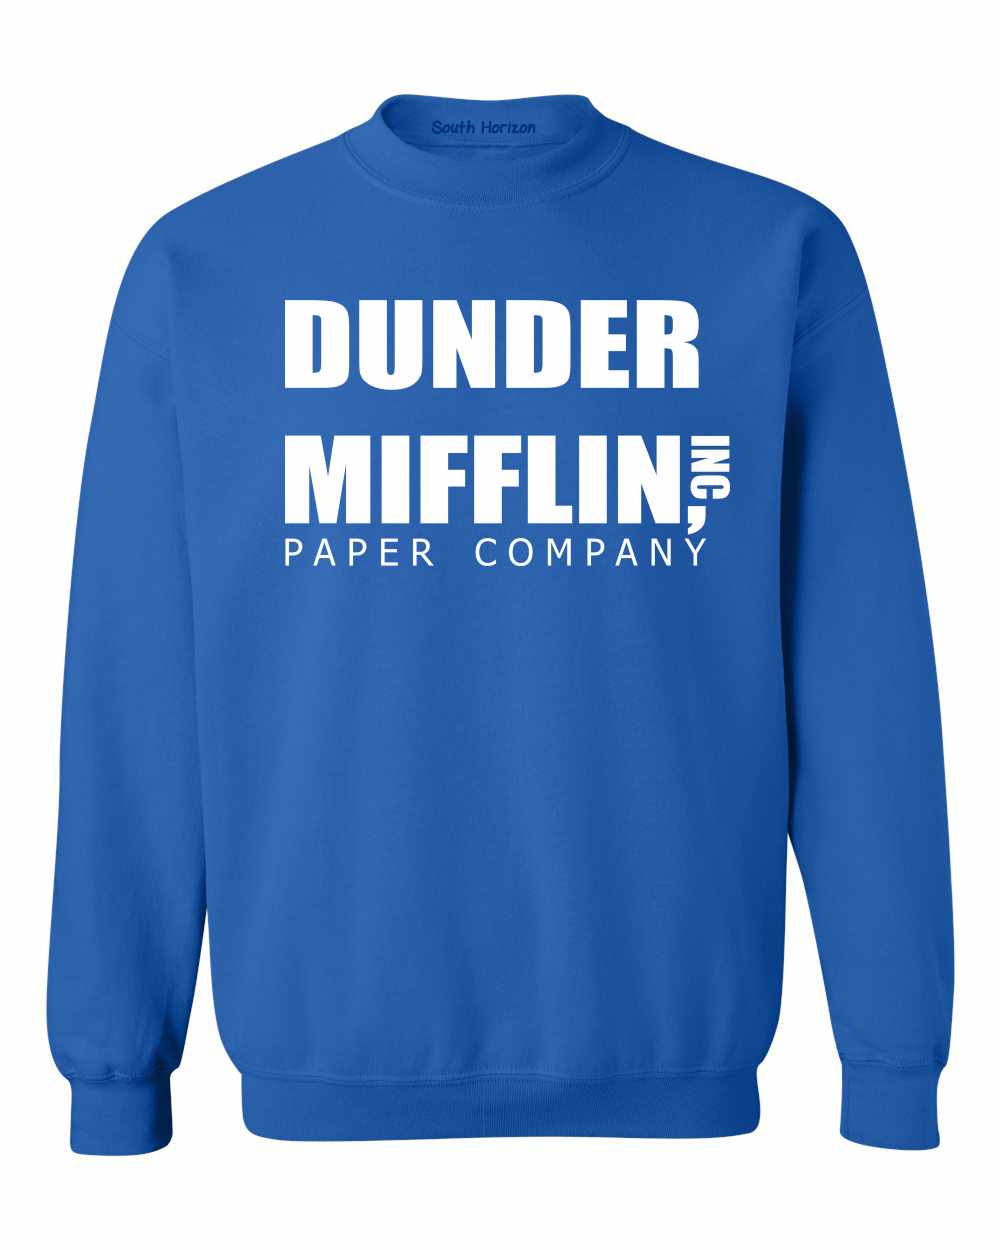 DUNDER MIFFLIN PAPER COMPANY on SweatShirt (#469-11)